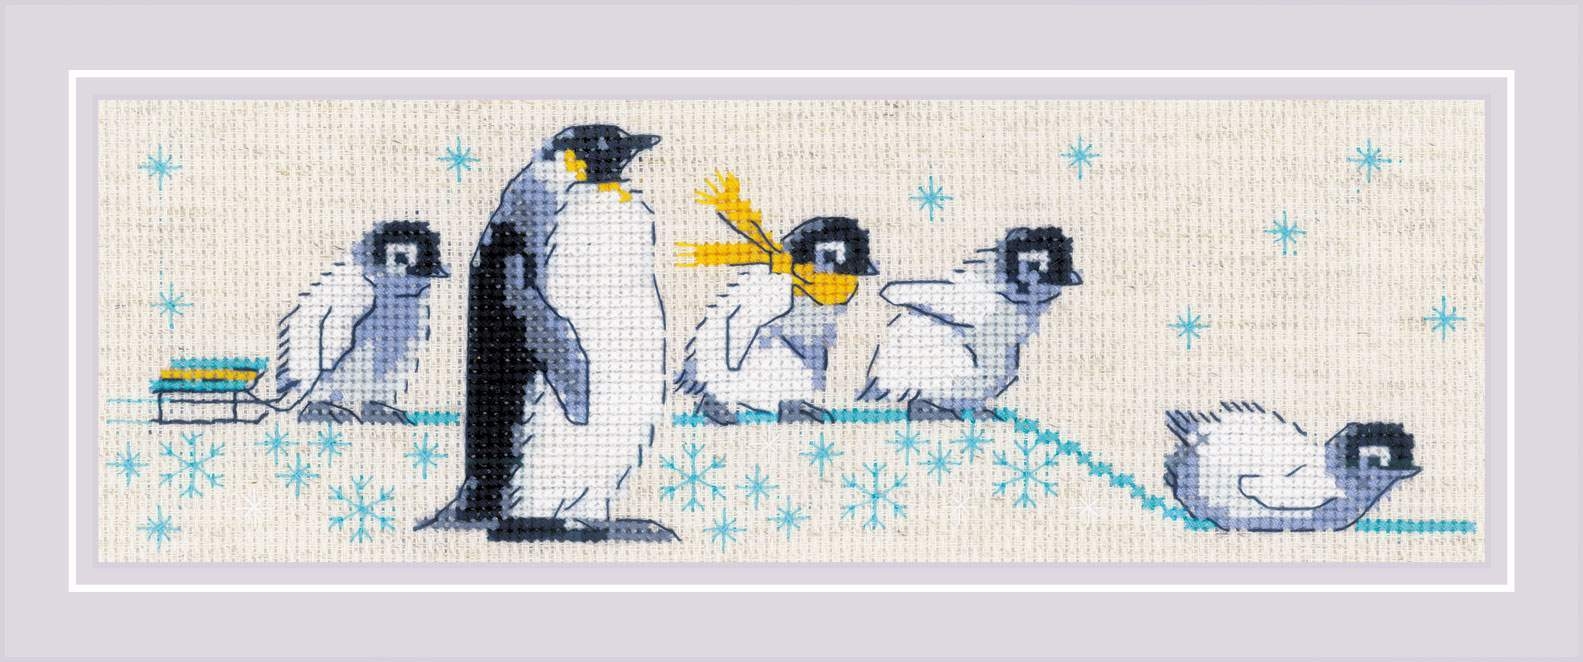 1975 "Пингвинчики"